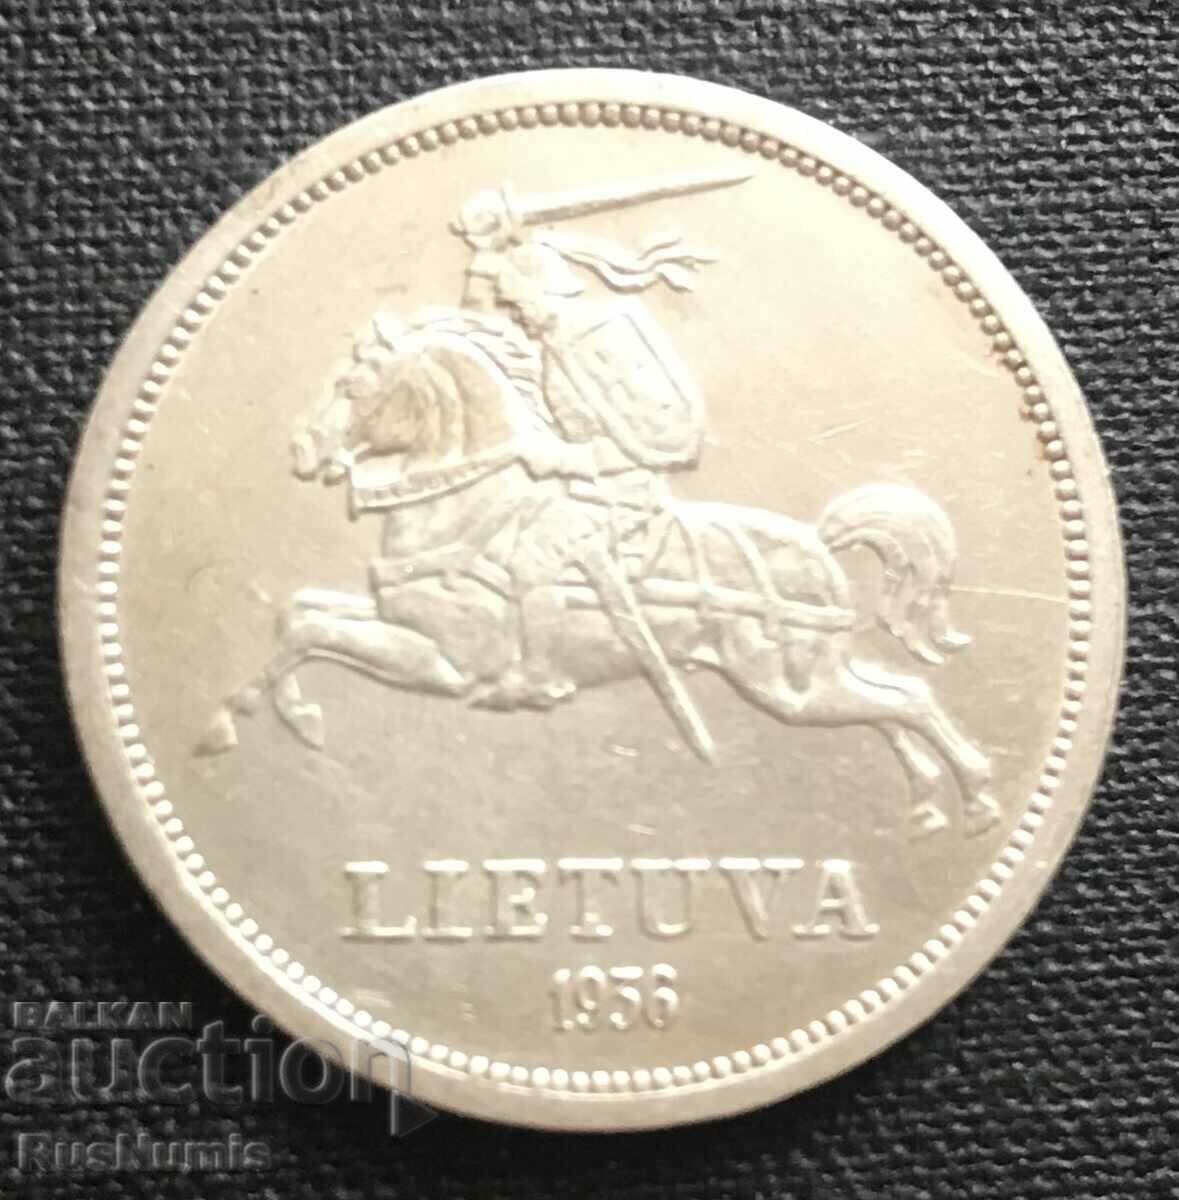 Lituania. 5 litas 1936. Argint.